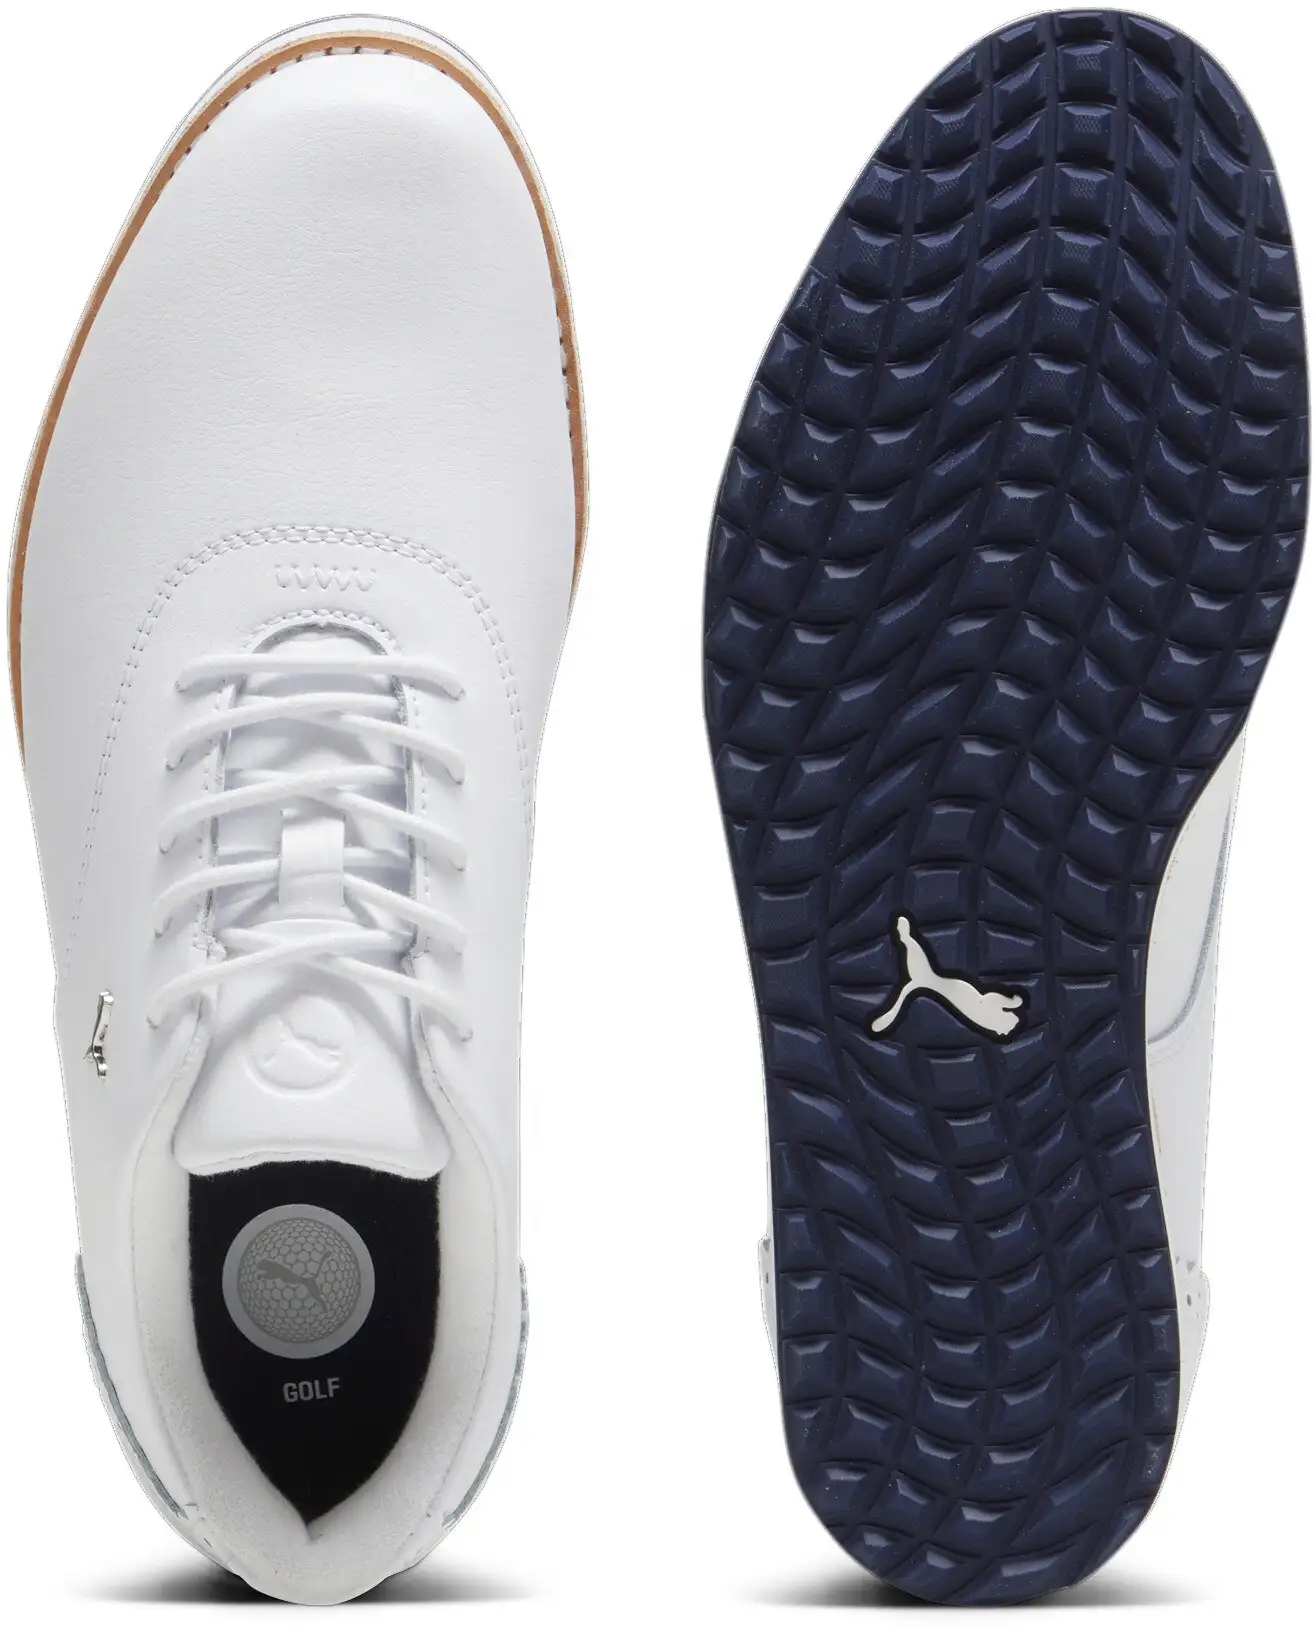 Puma Avant Golfschuh, weiß/dunkelblau